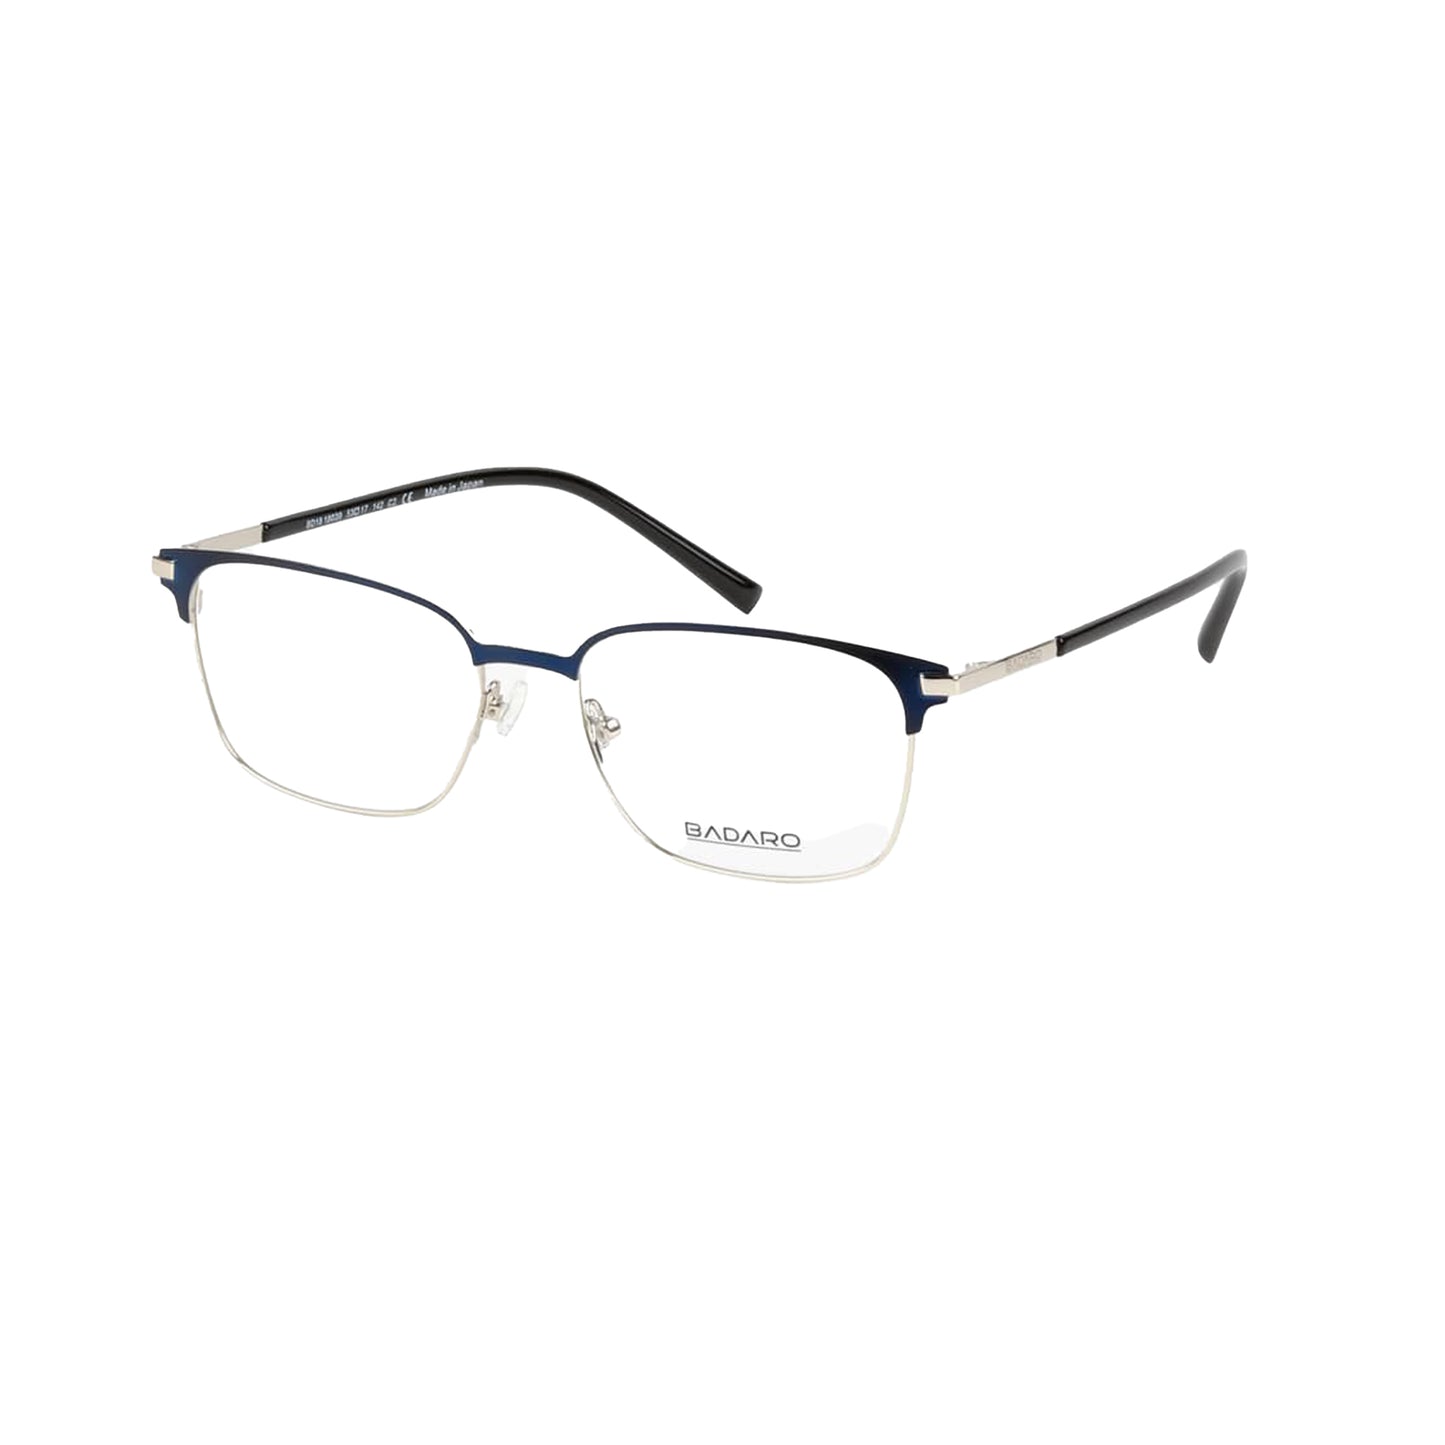 Badaro Blue Square Metal Full Rim Eyeglasses